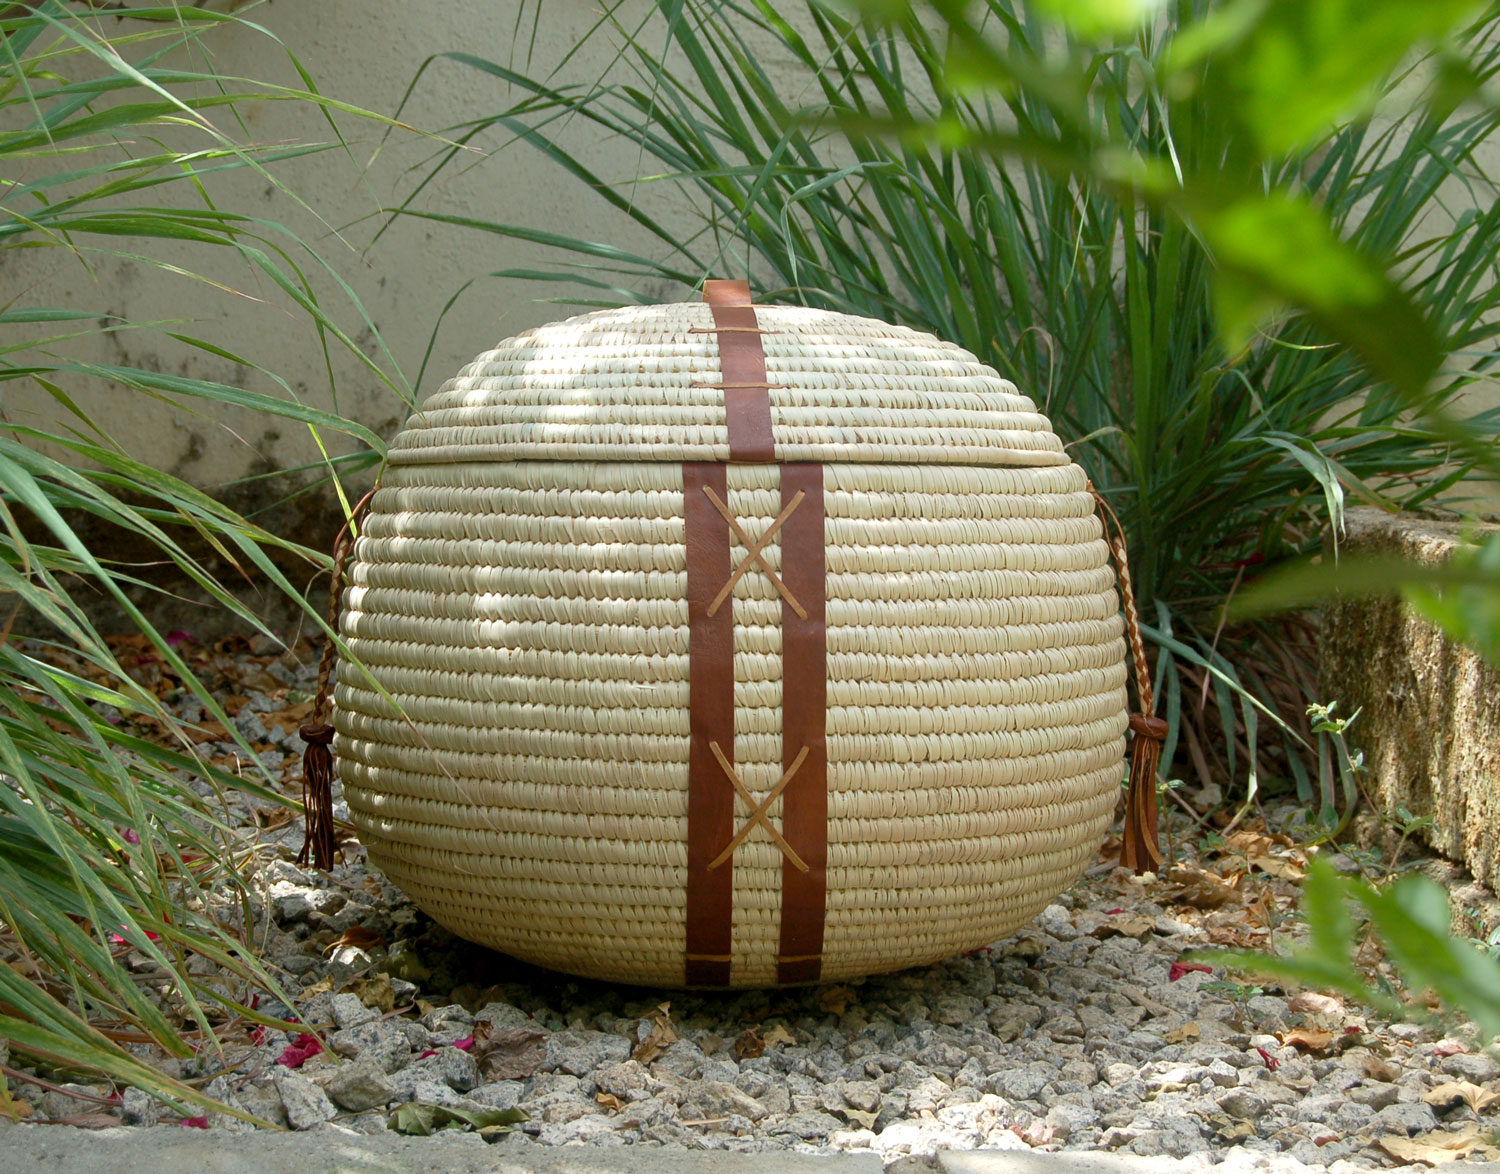 AfriMod Natural #4: Homage to Hausa – Large Lidded Storage Basket